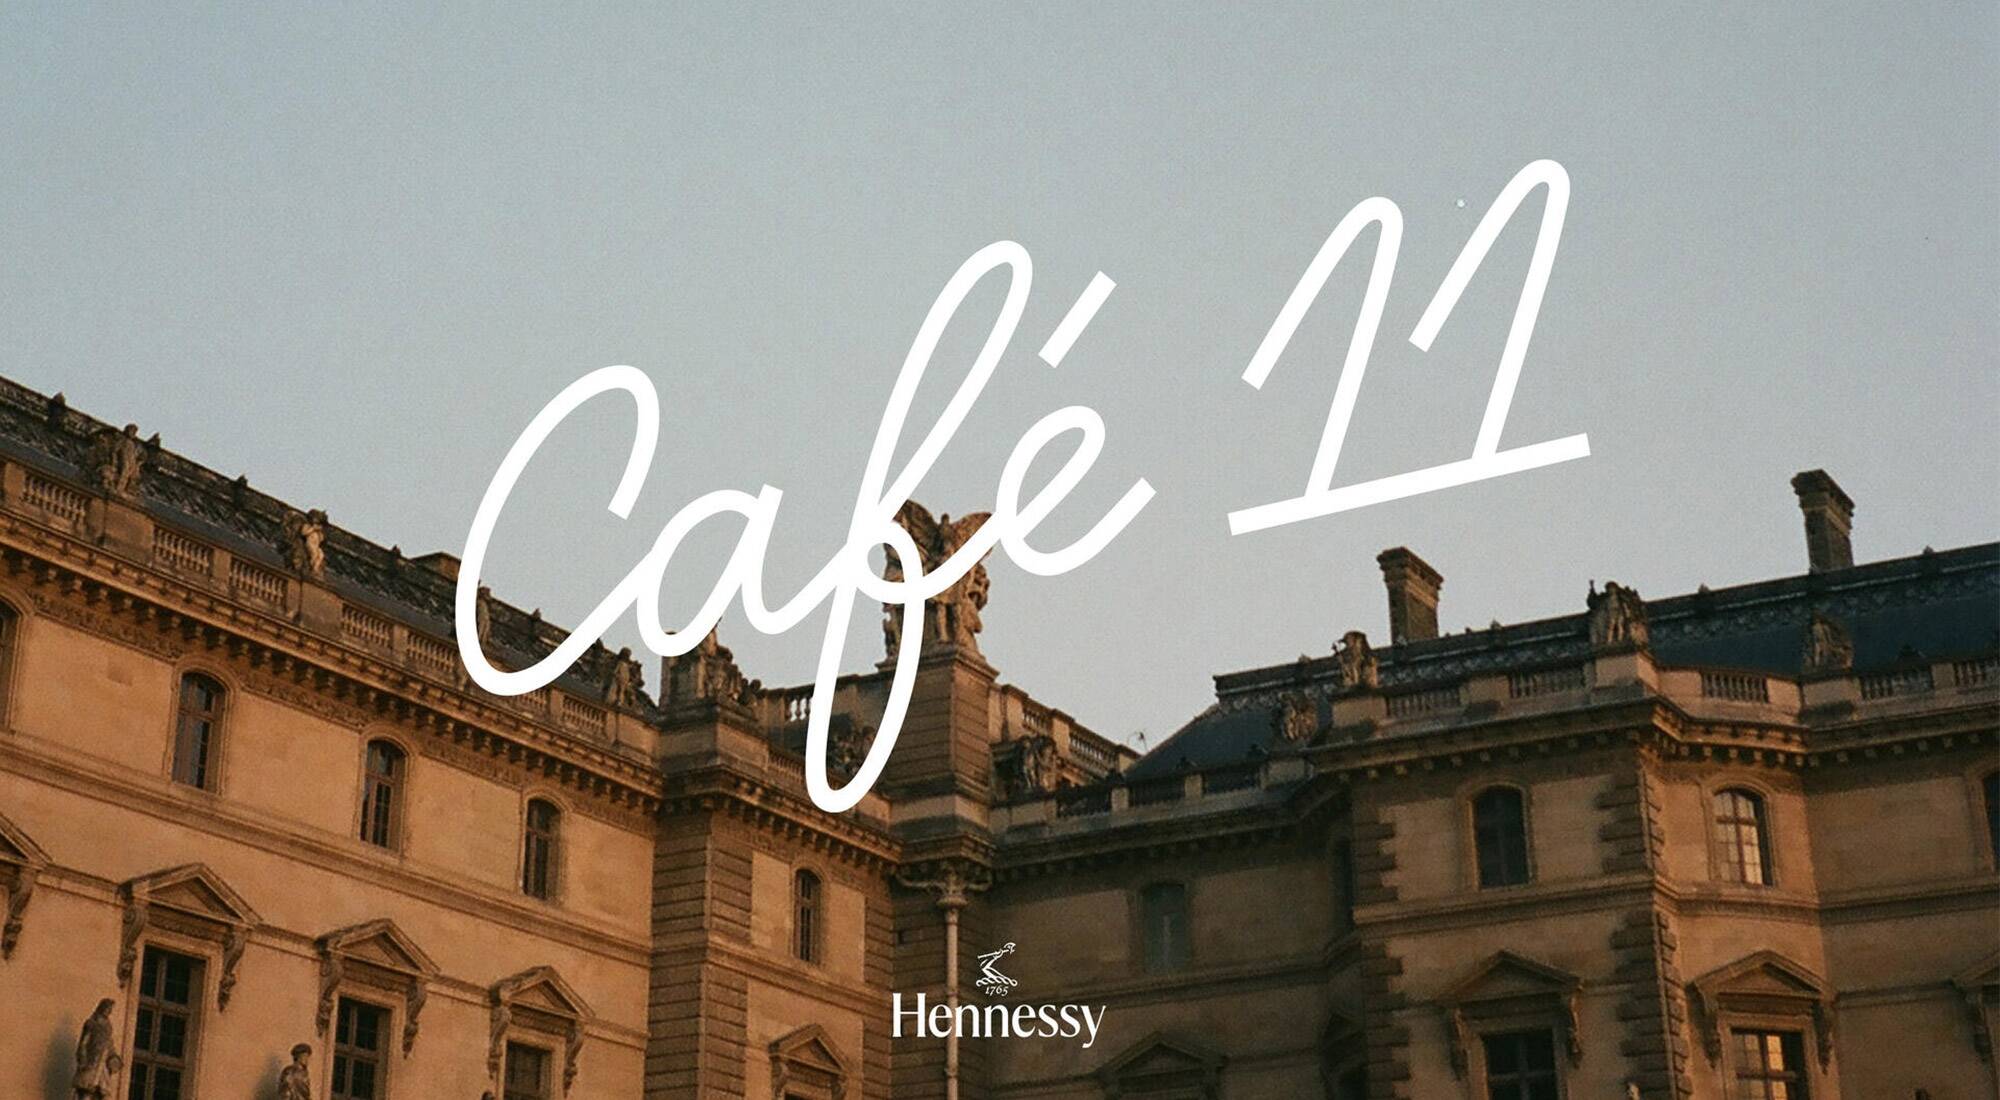 Hennesy x Cafe 11